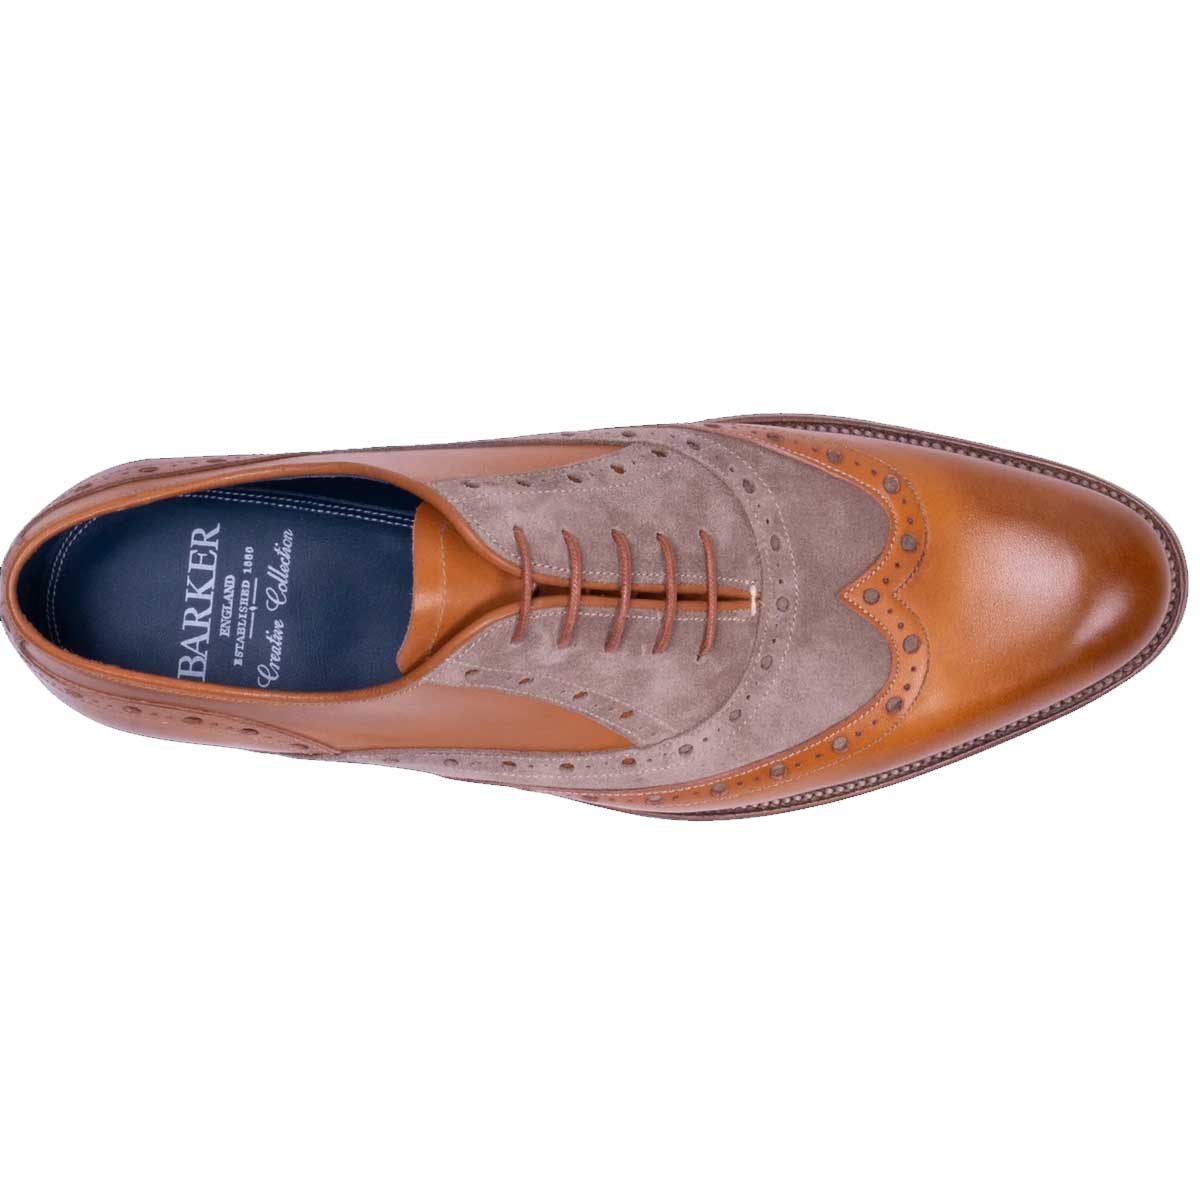 BARKER Abingdon Shoes - Mens - Cedar Calf/Parchment Suede